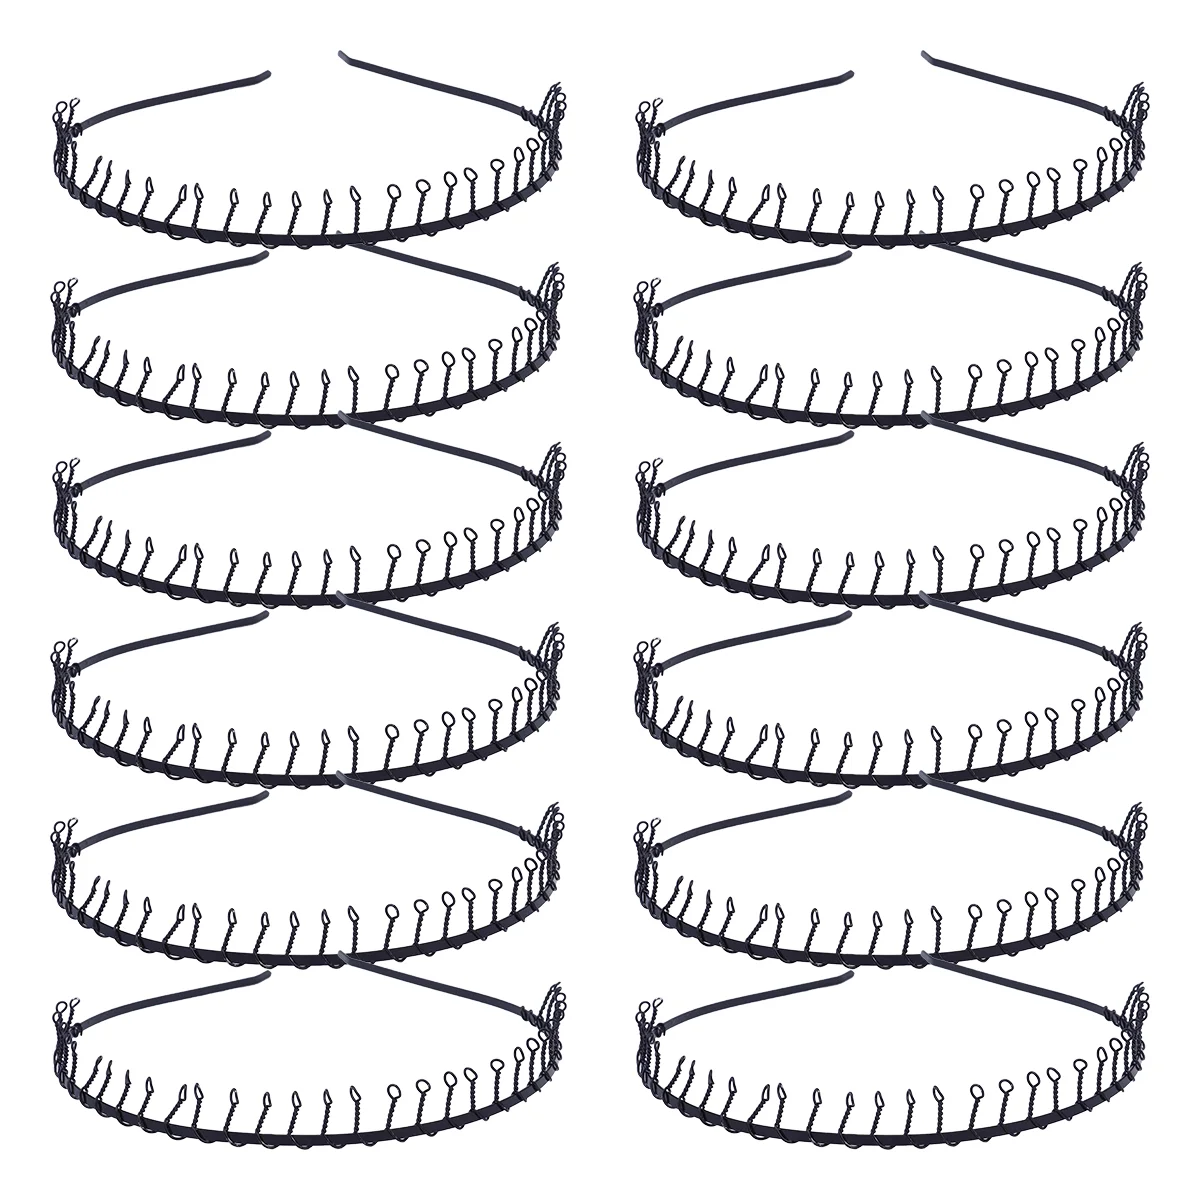 

24pcs Metal Comb Headbands Hard Hair Bands Metal Plain Hair Hoops Hair Accessories Gifts for Bathroom